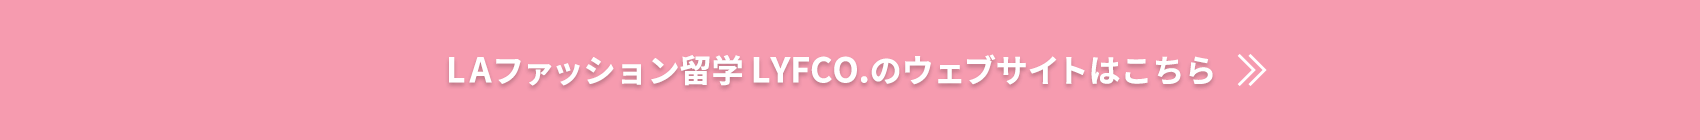 LAファッション留学LYFCO.のウェブサイトはこちら